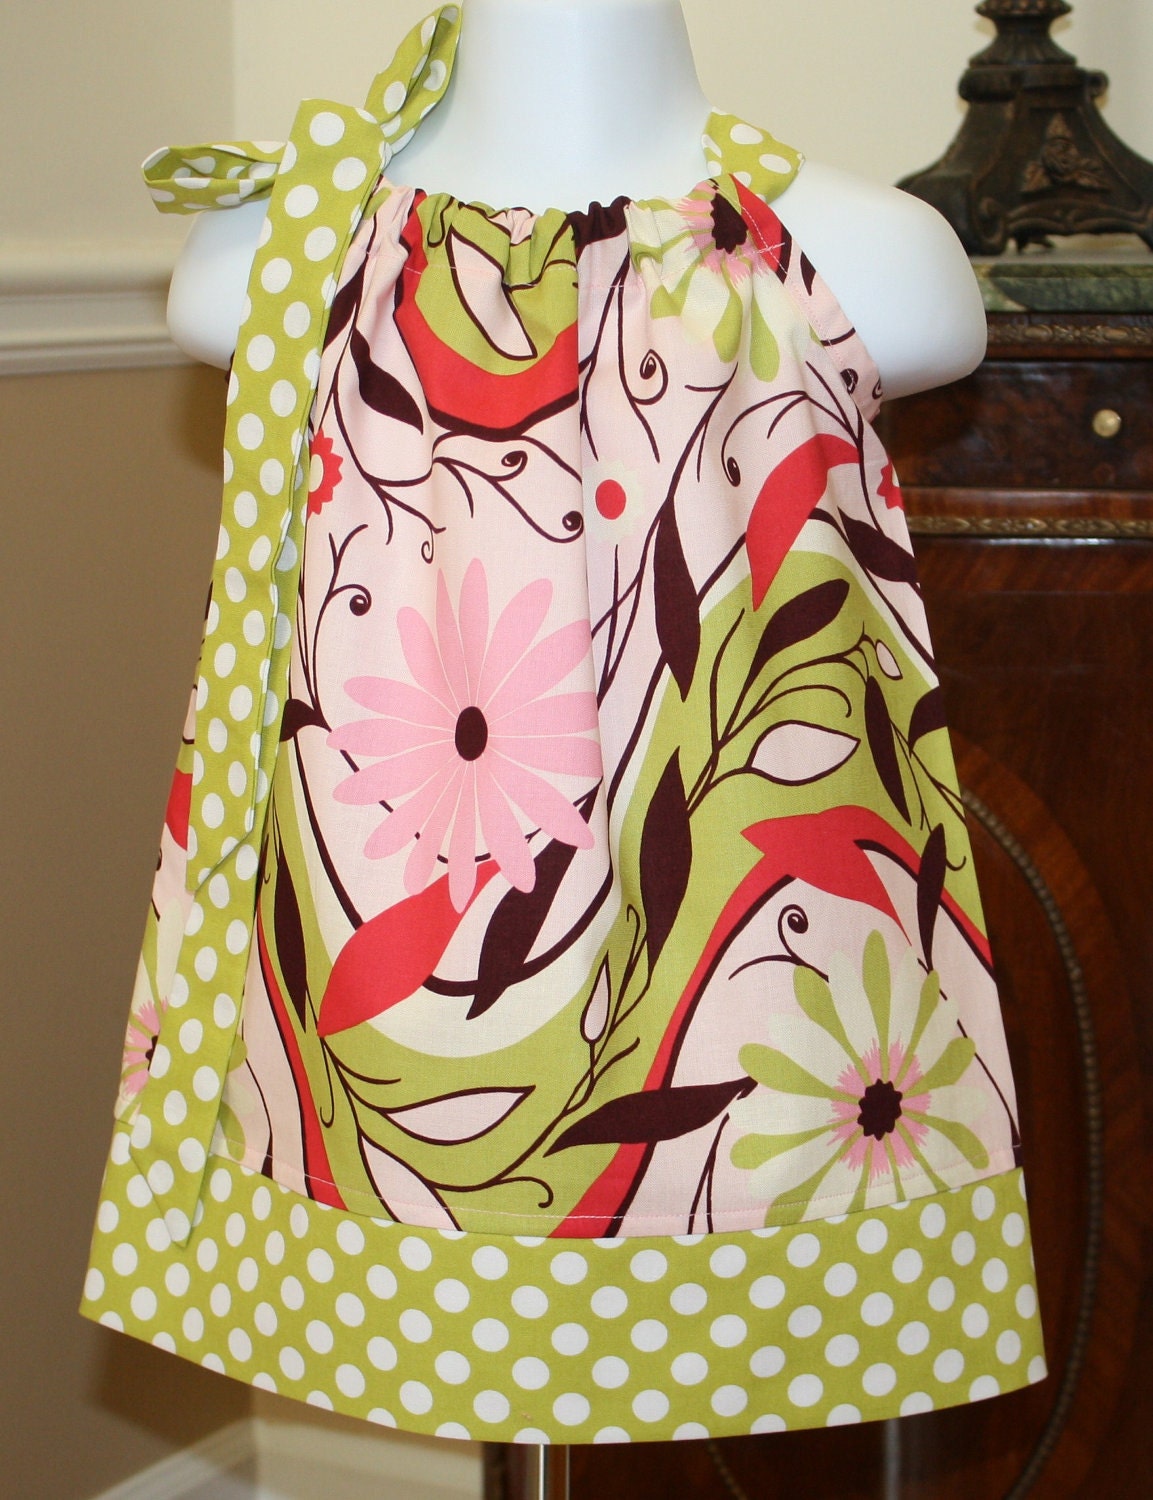 SALE Pillowcase dress girls baby toddler dresses by BlakeandBailey